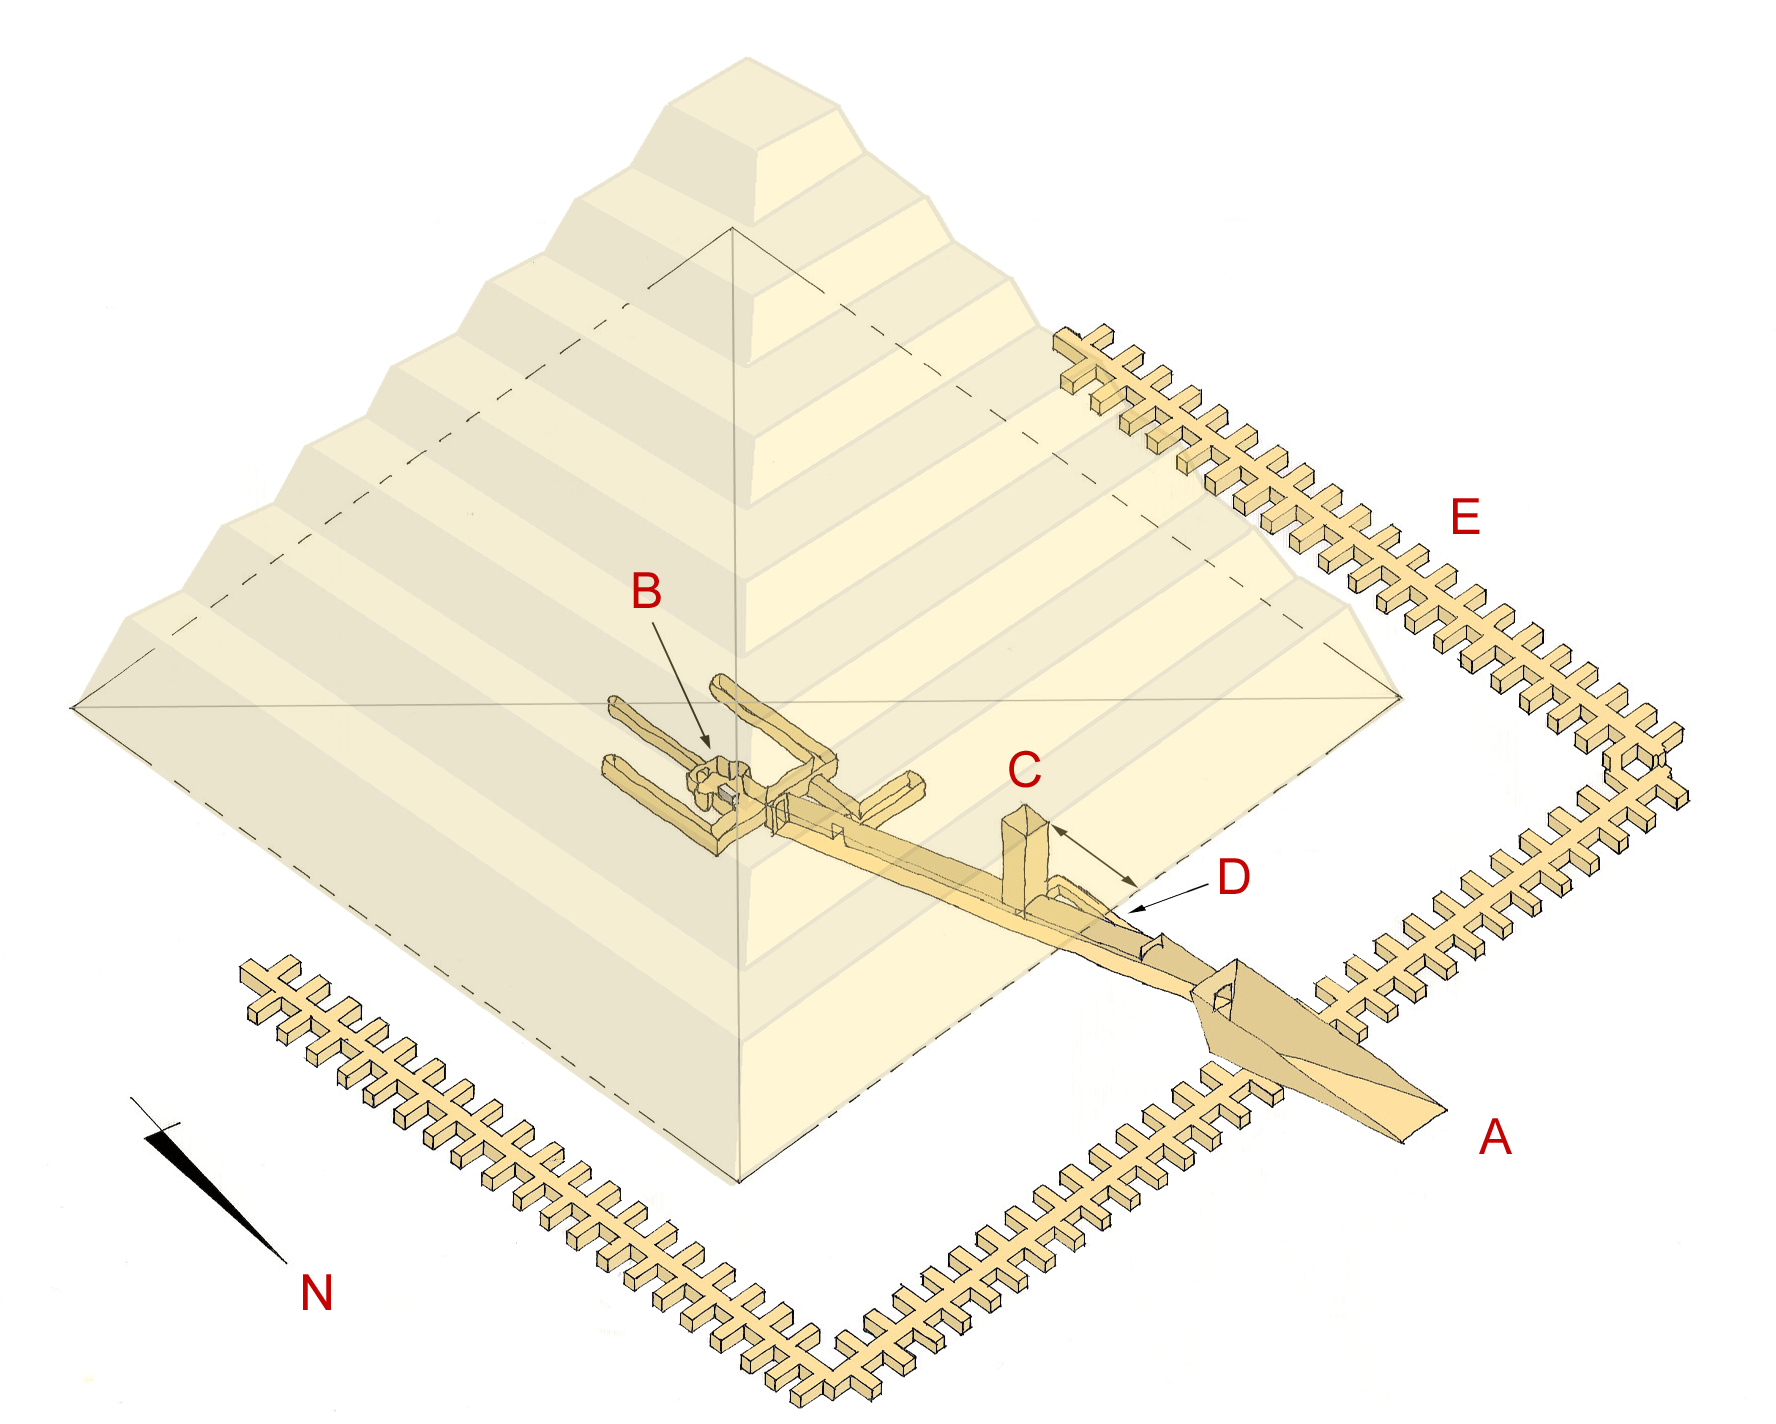 sekhemkhet pyramid (buried pyramid)